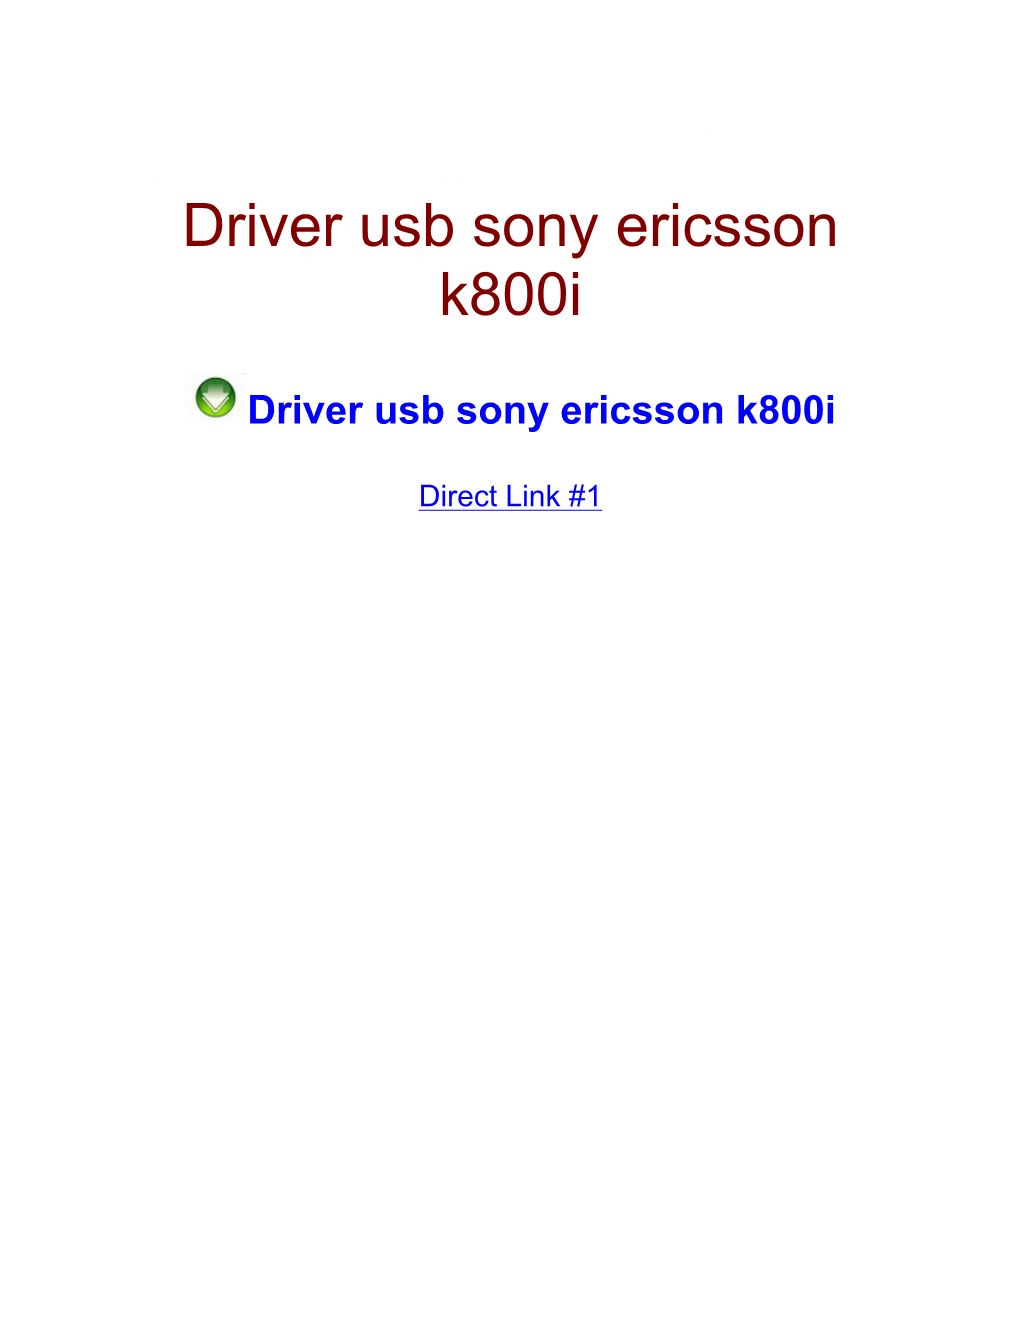 Driver Usb Sony Ericsson K800i